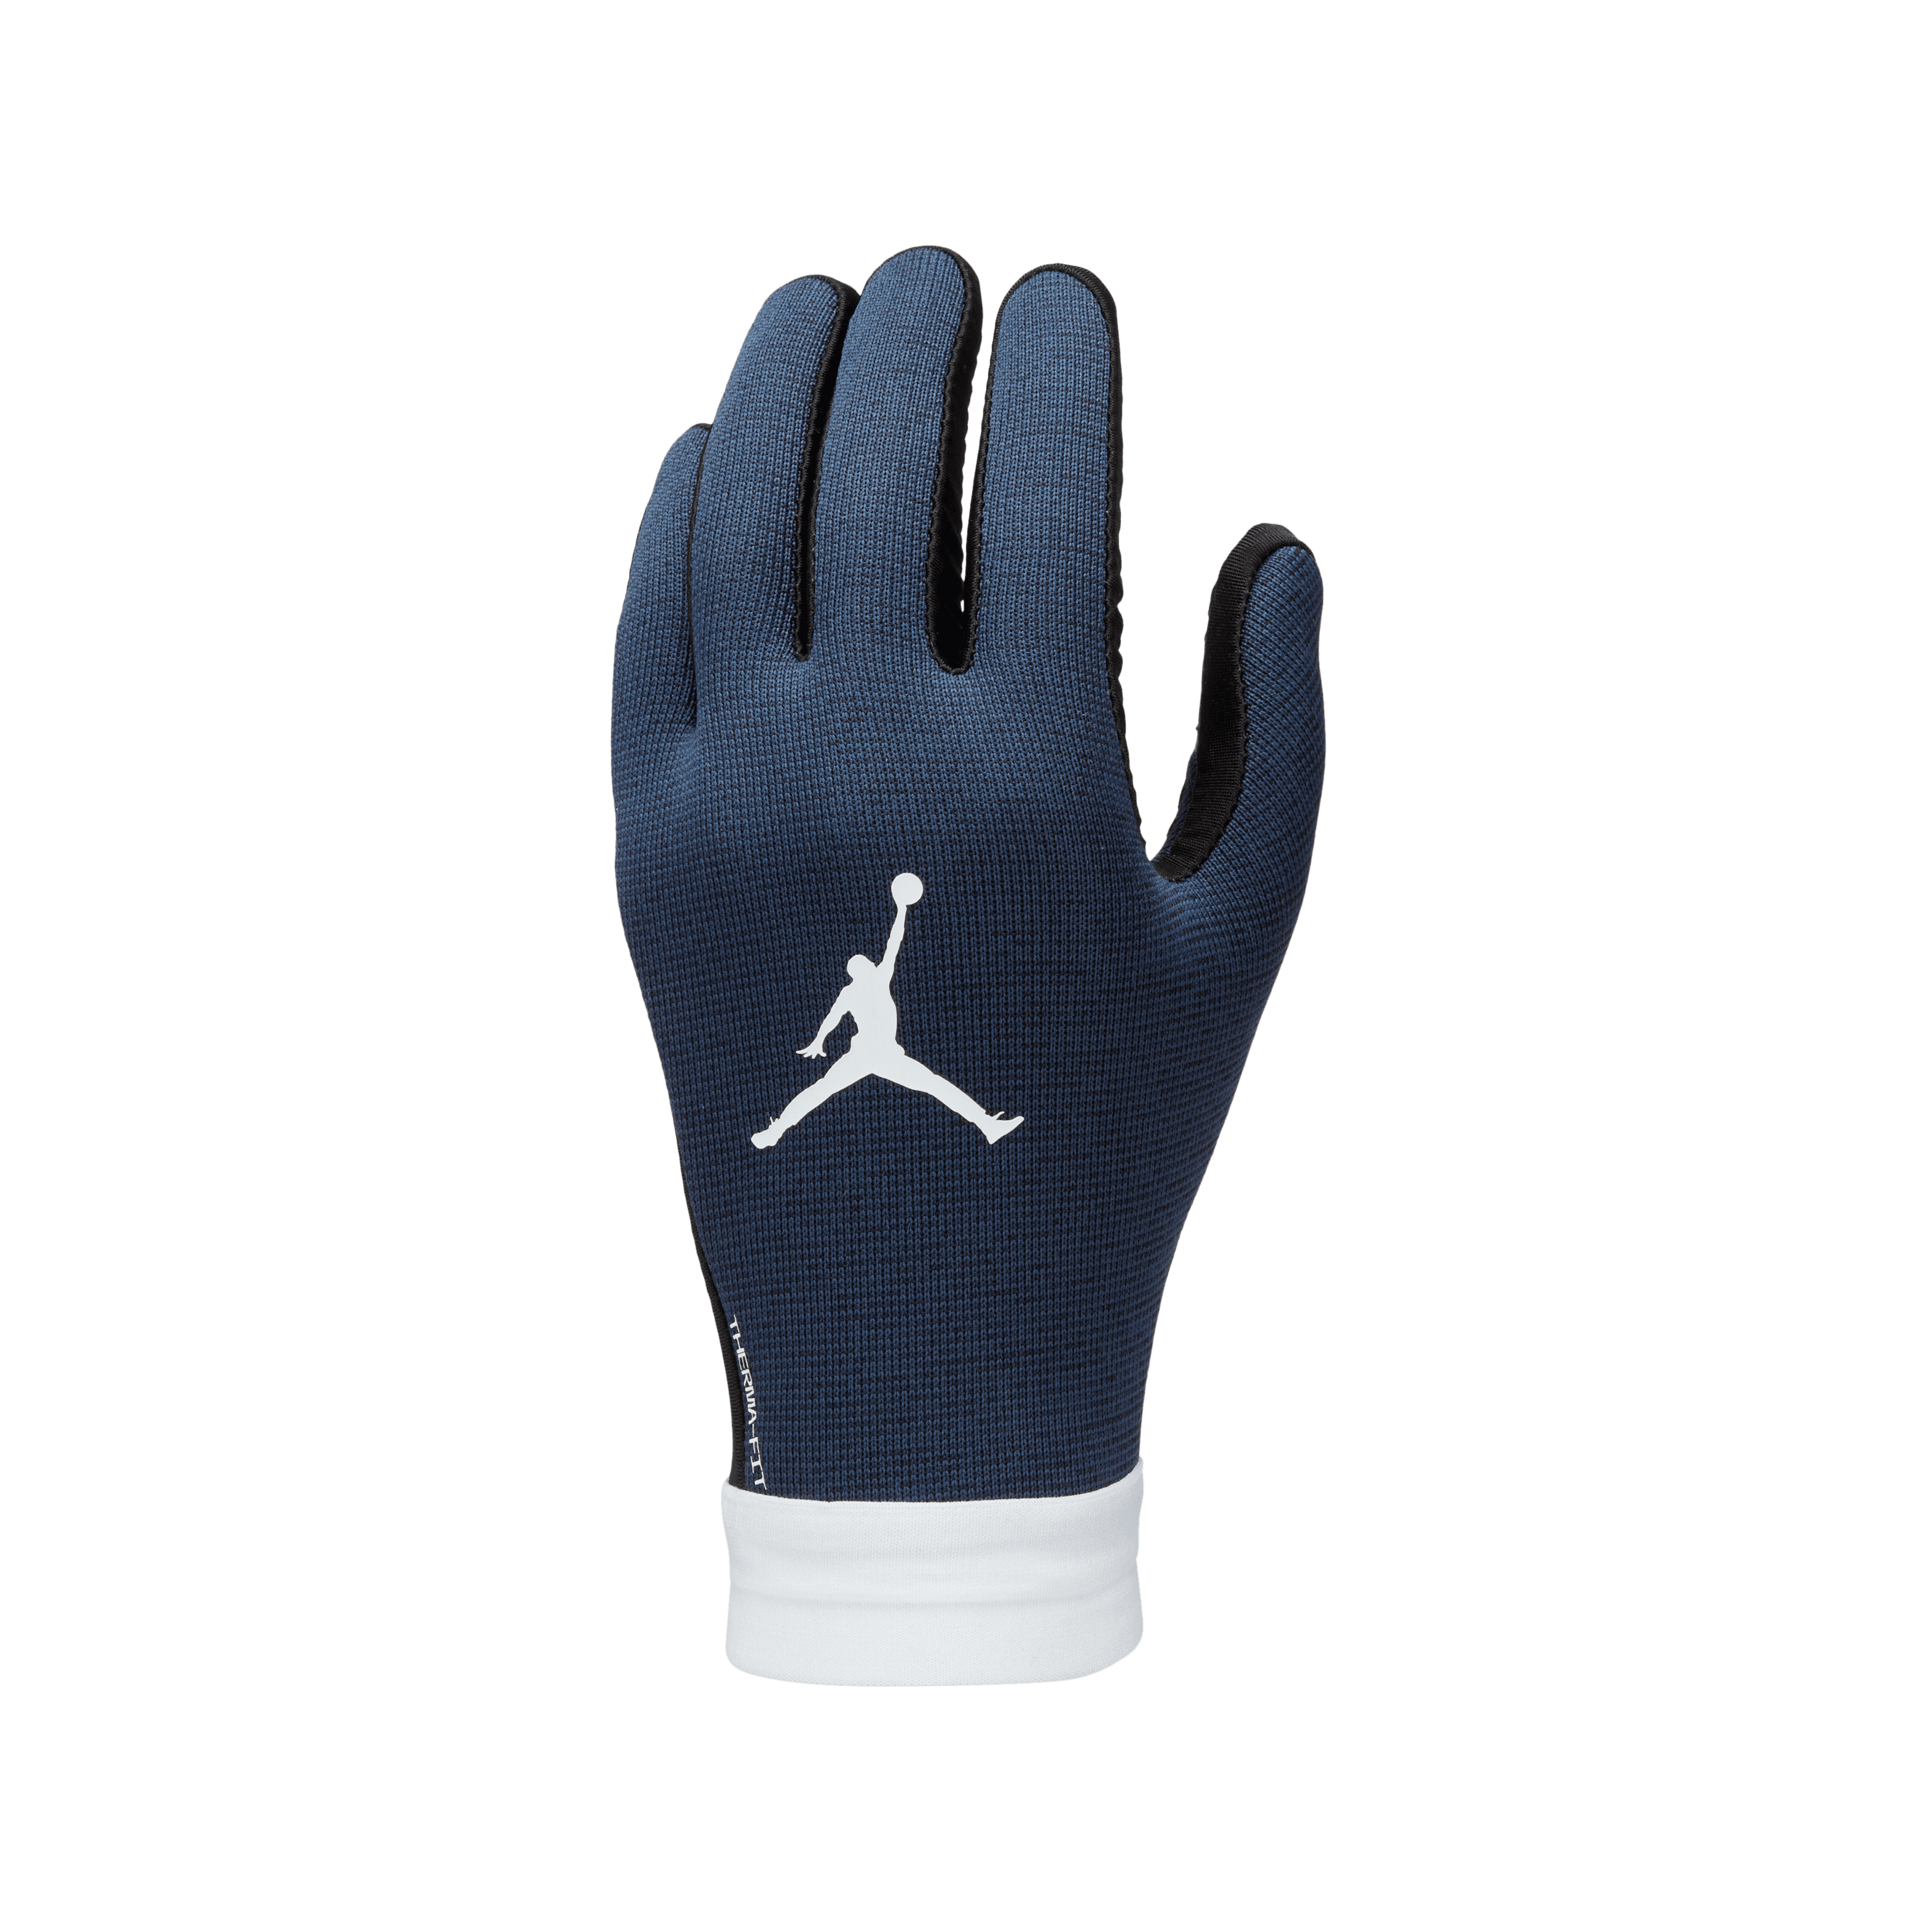 Nike Paris Saint Germain Academy Player Gloves